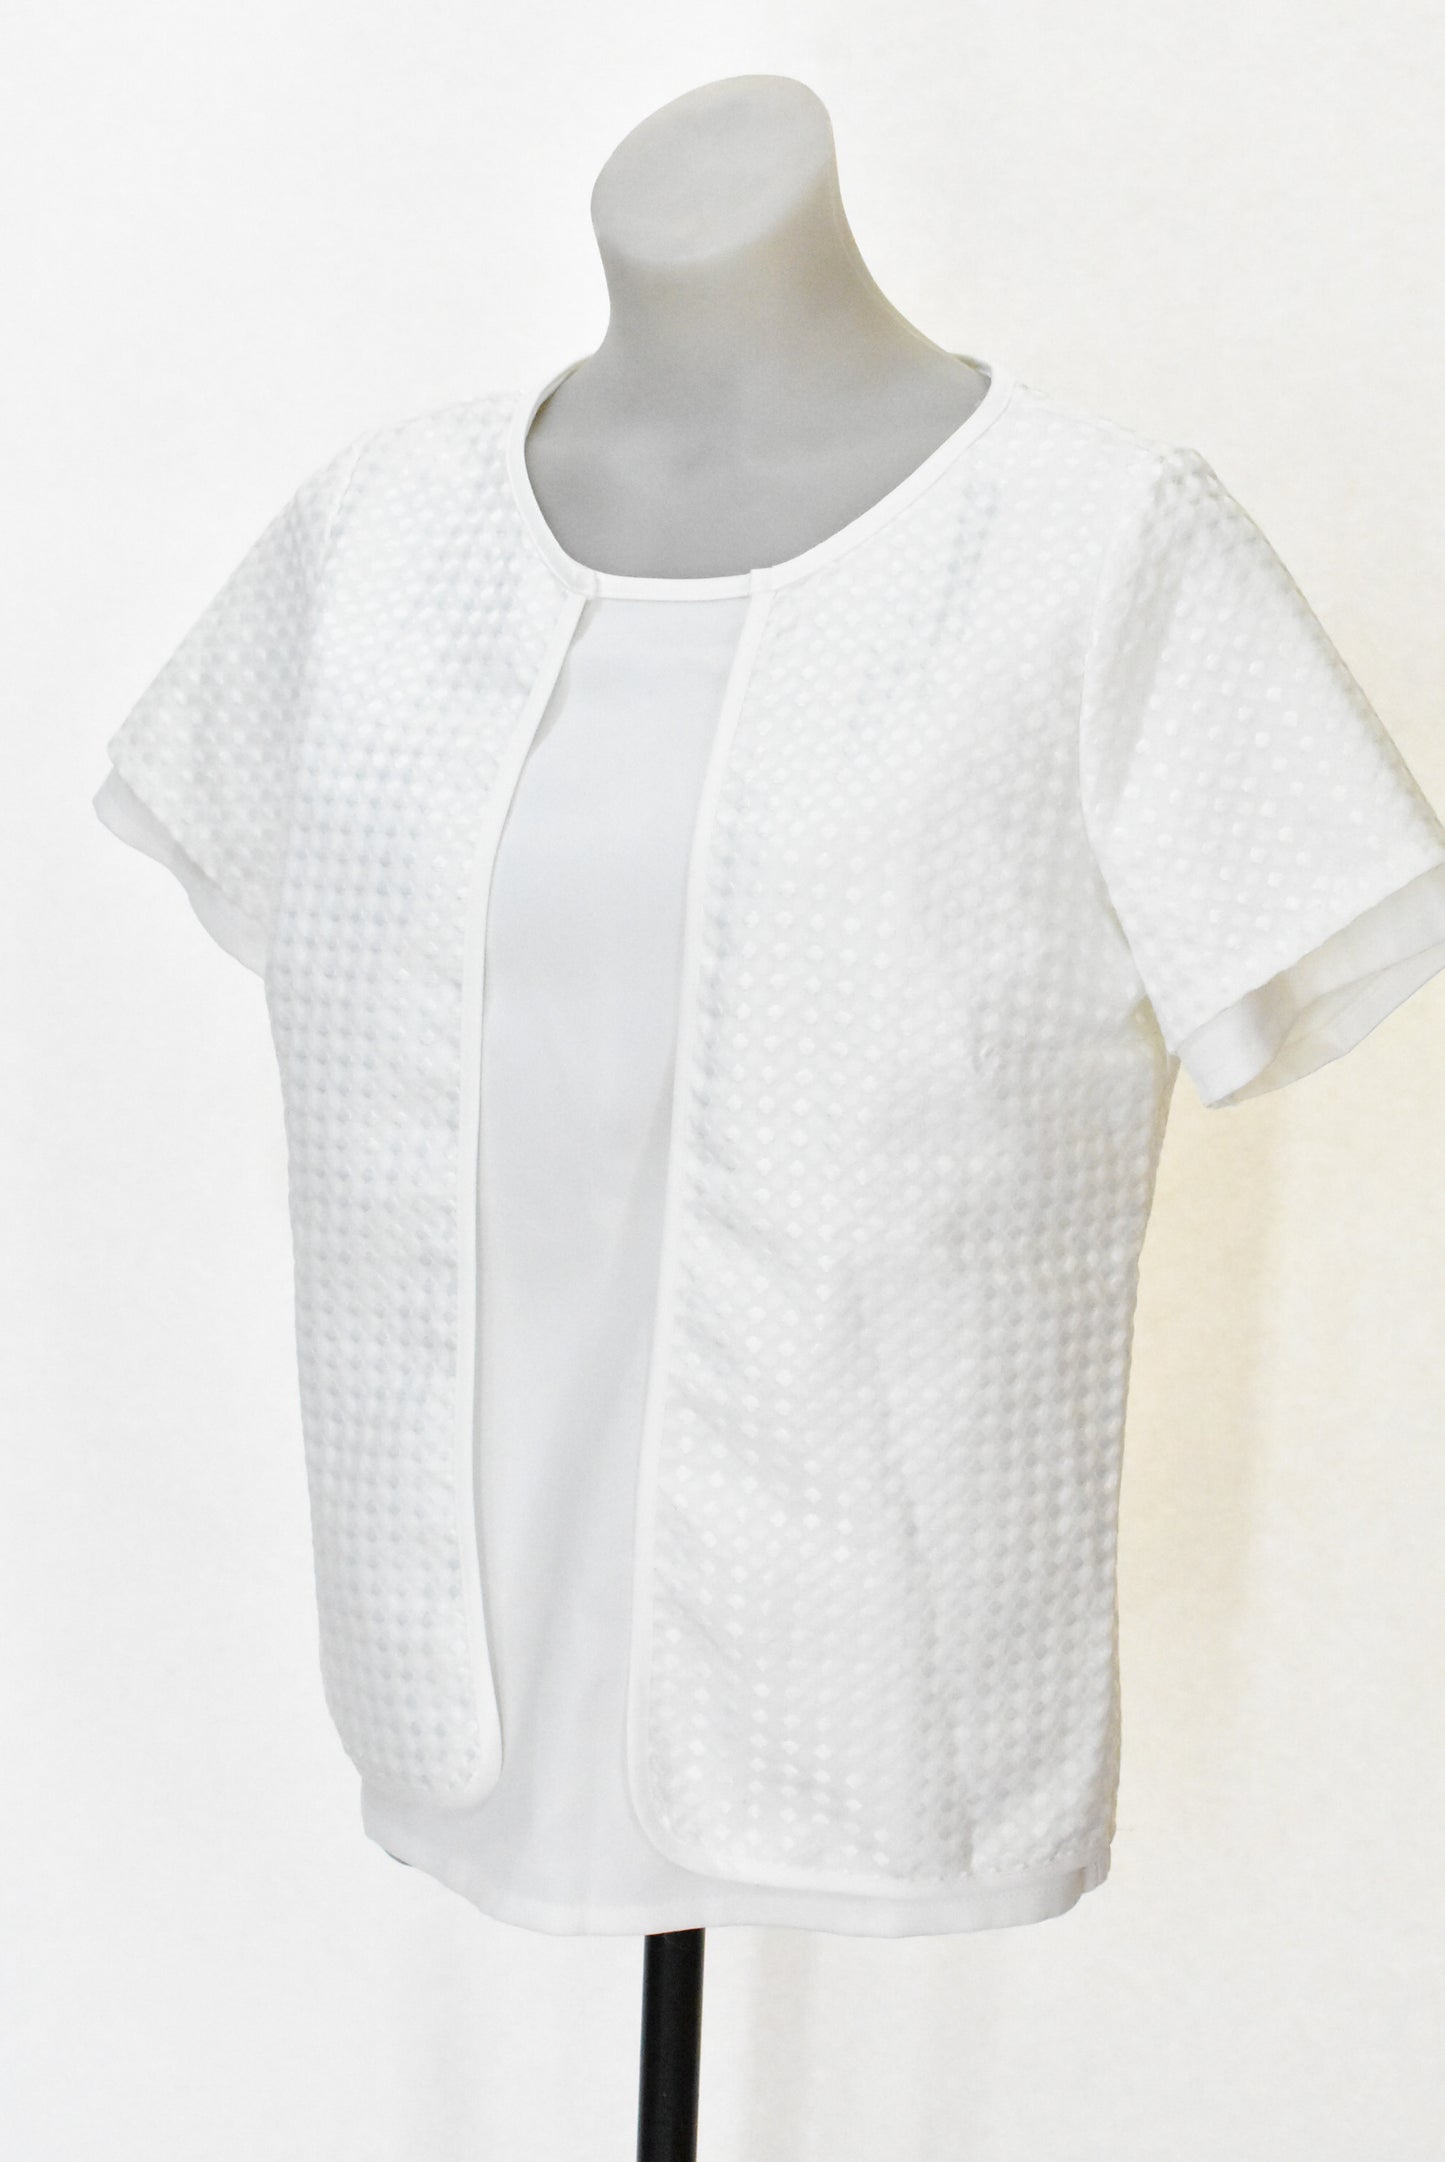 Trish Peng stylish white top, 10